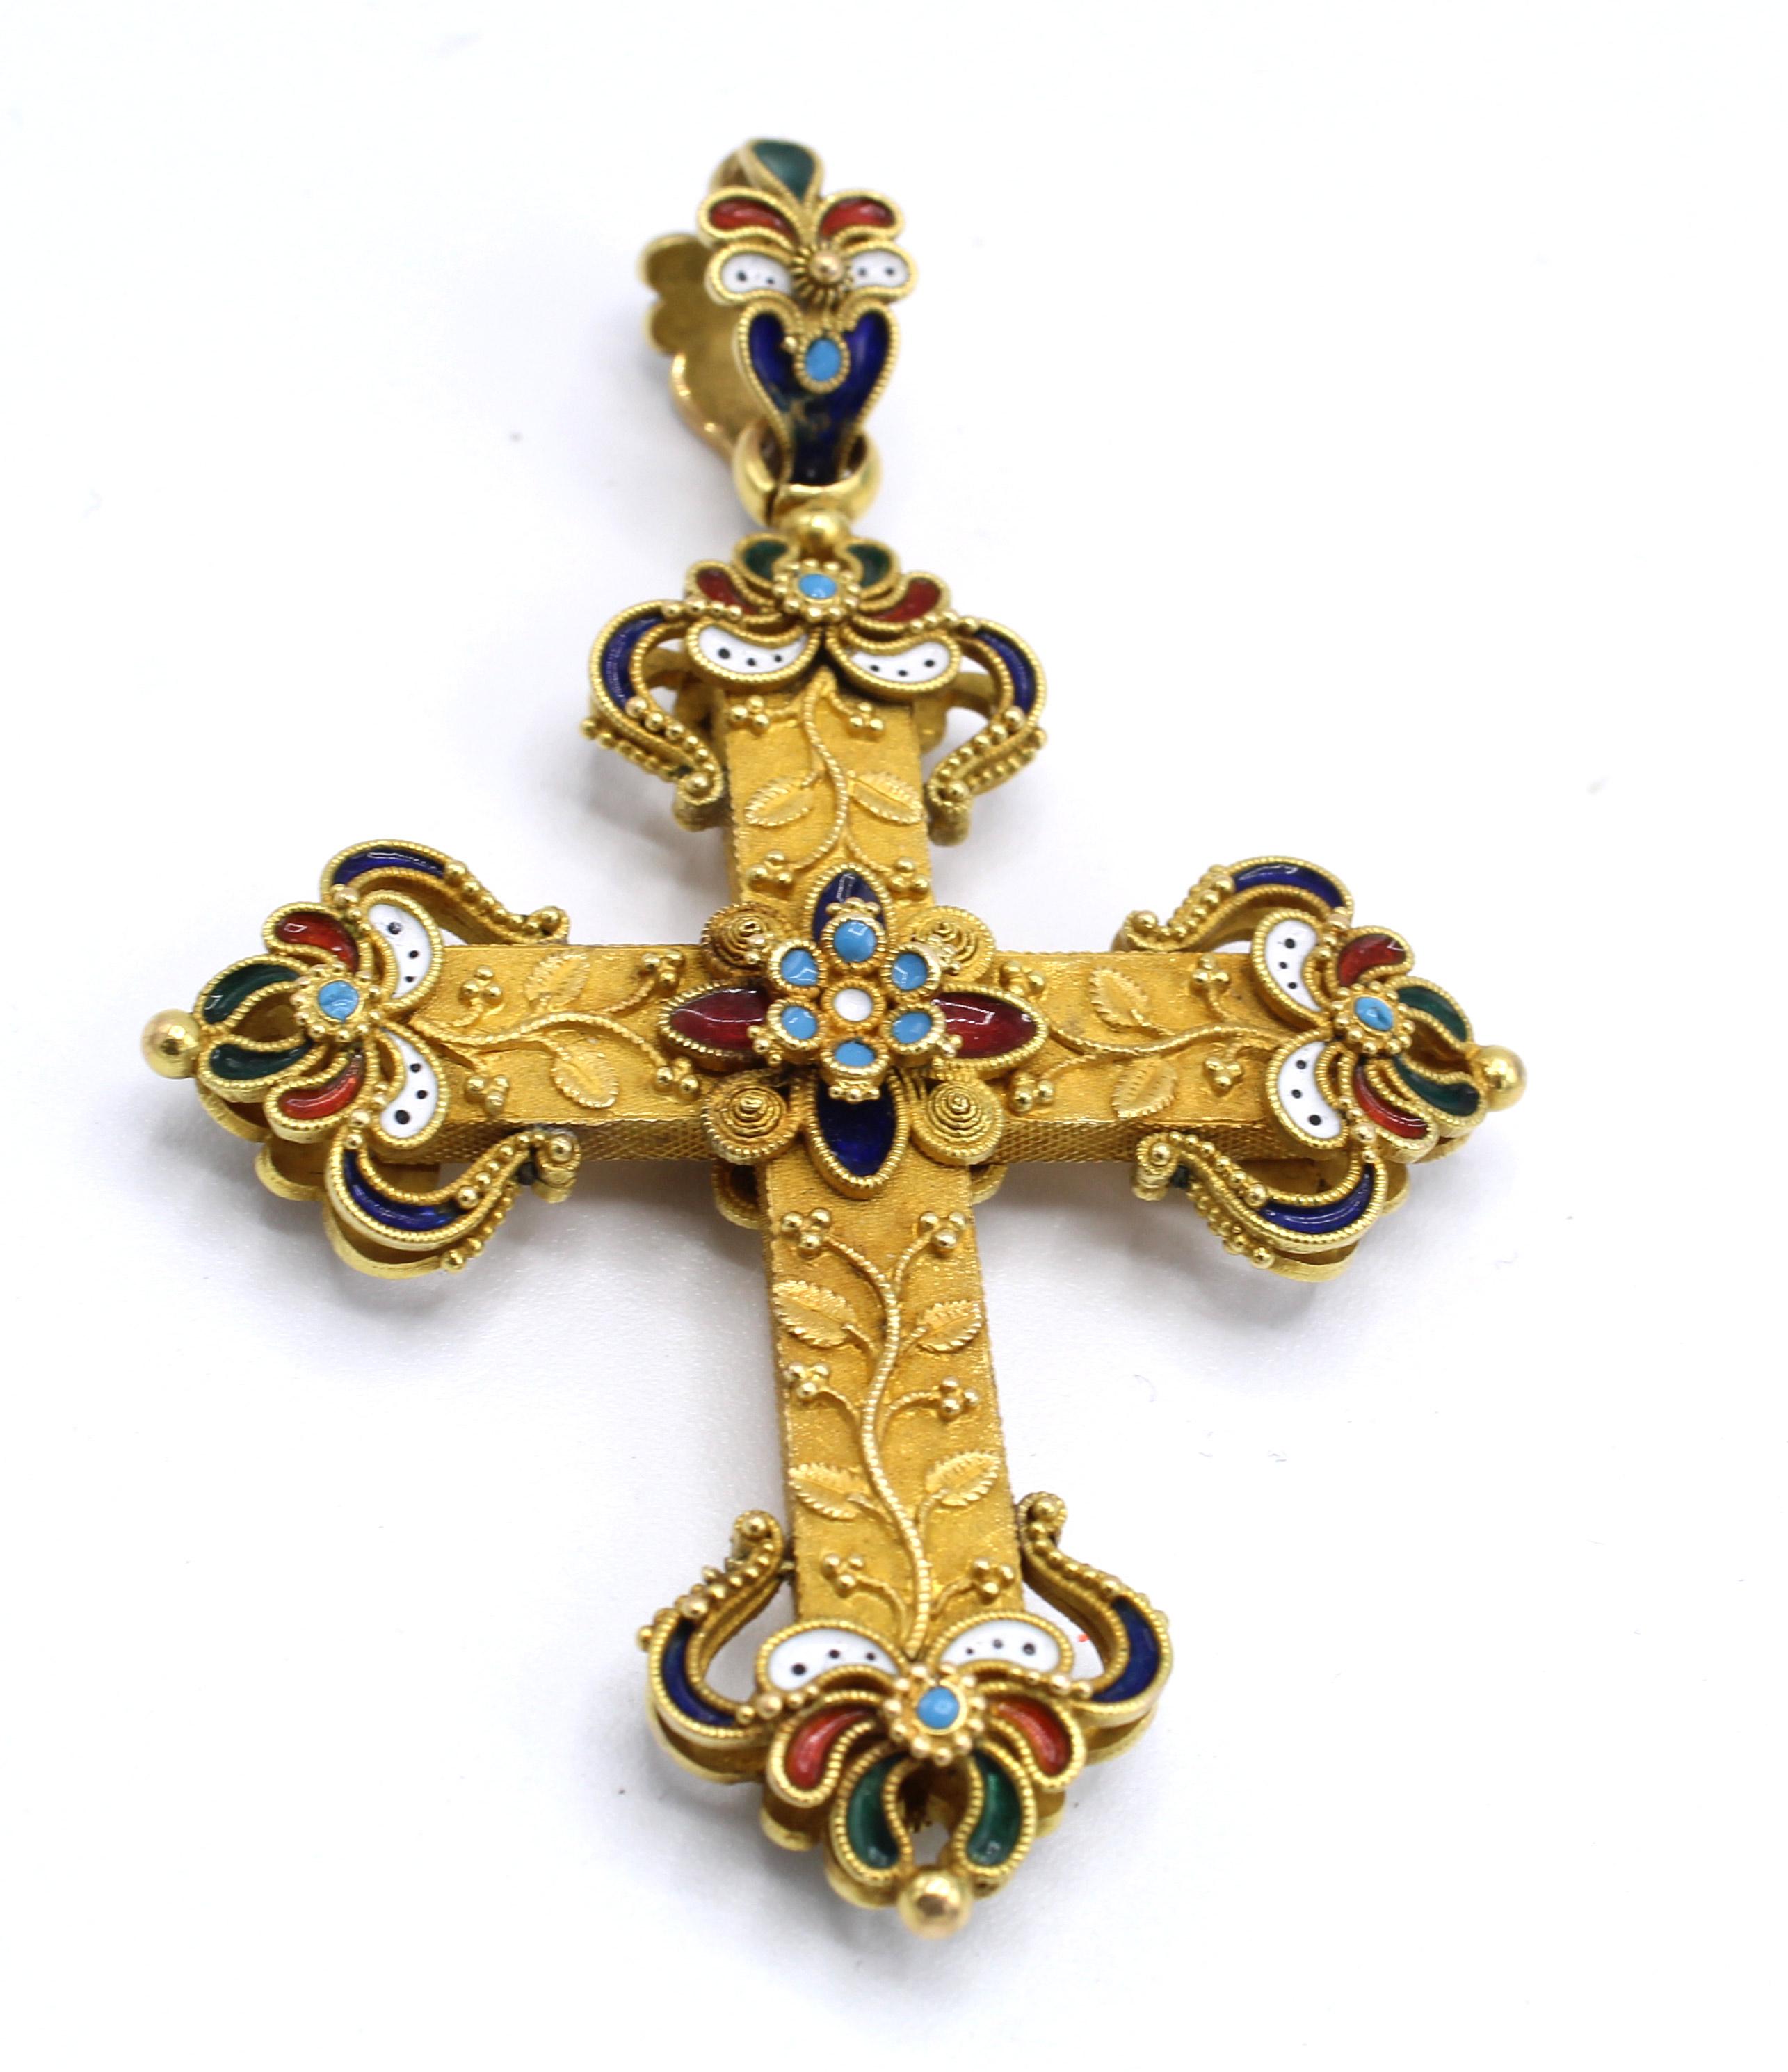 vintage gold cross necklace